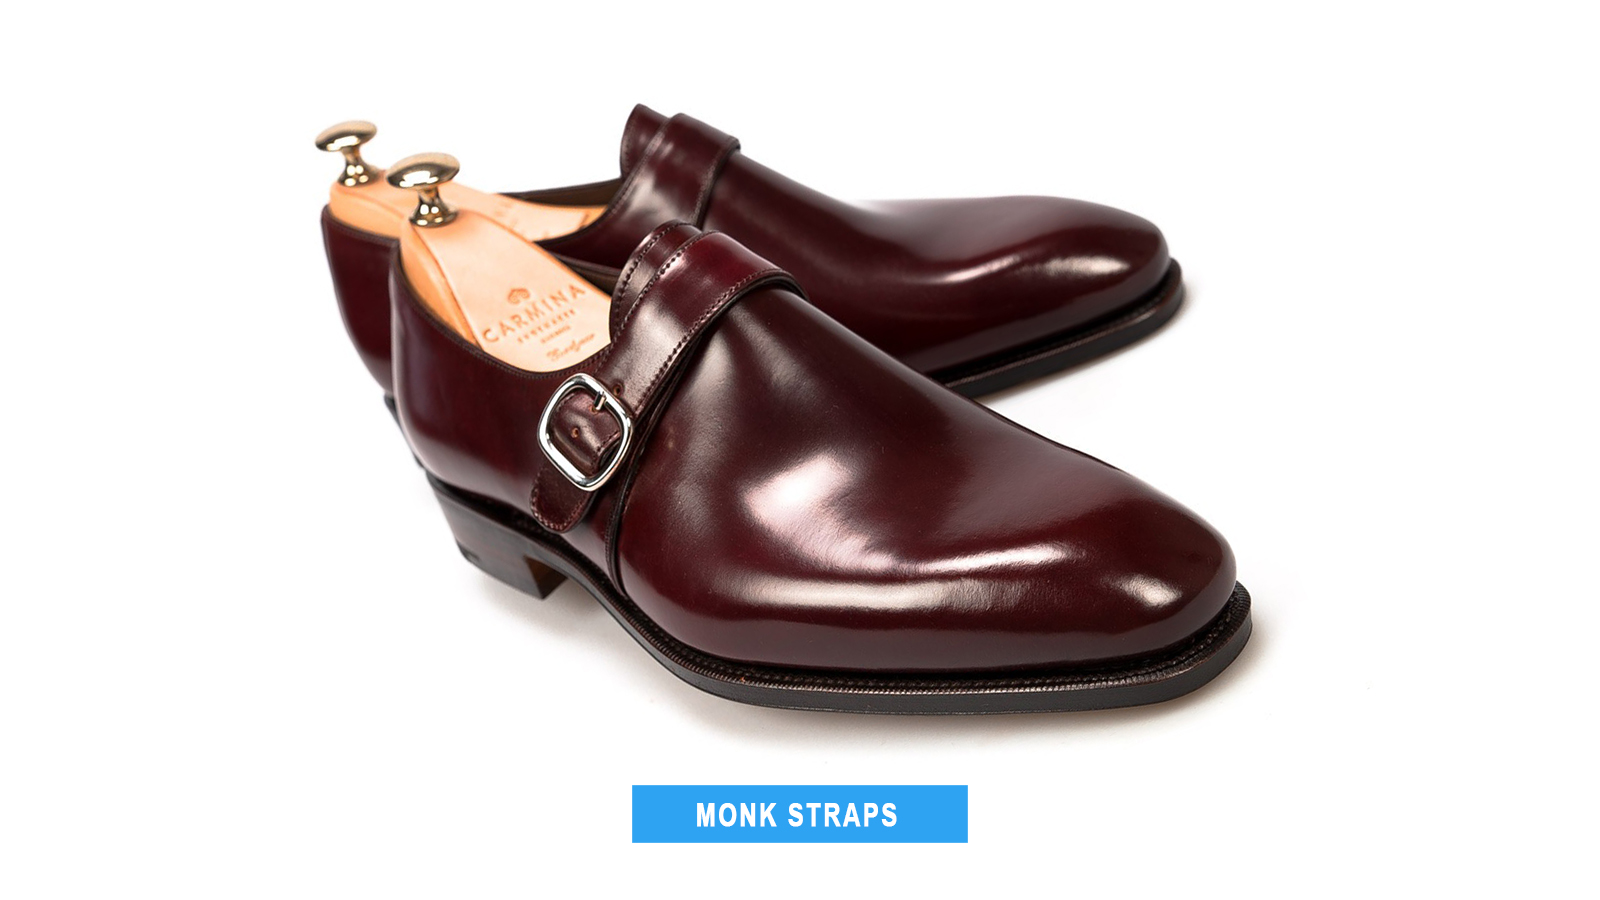 burgundy monk straps dress shoe style